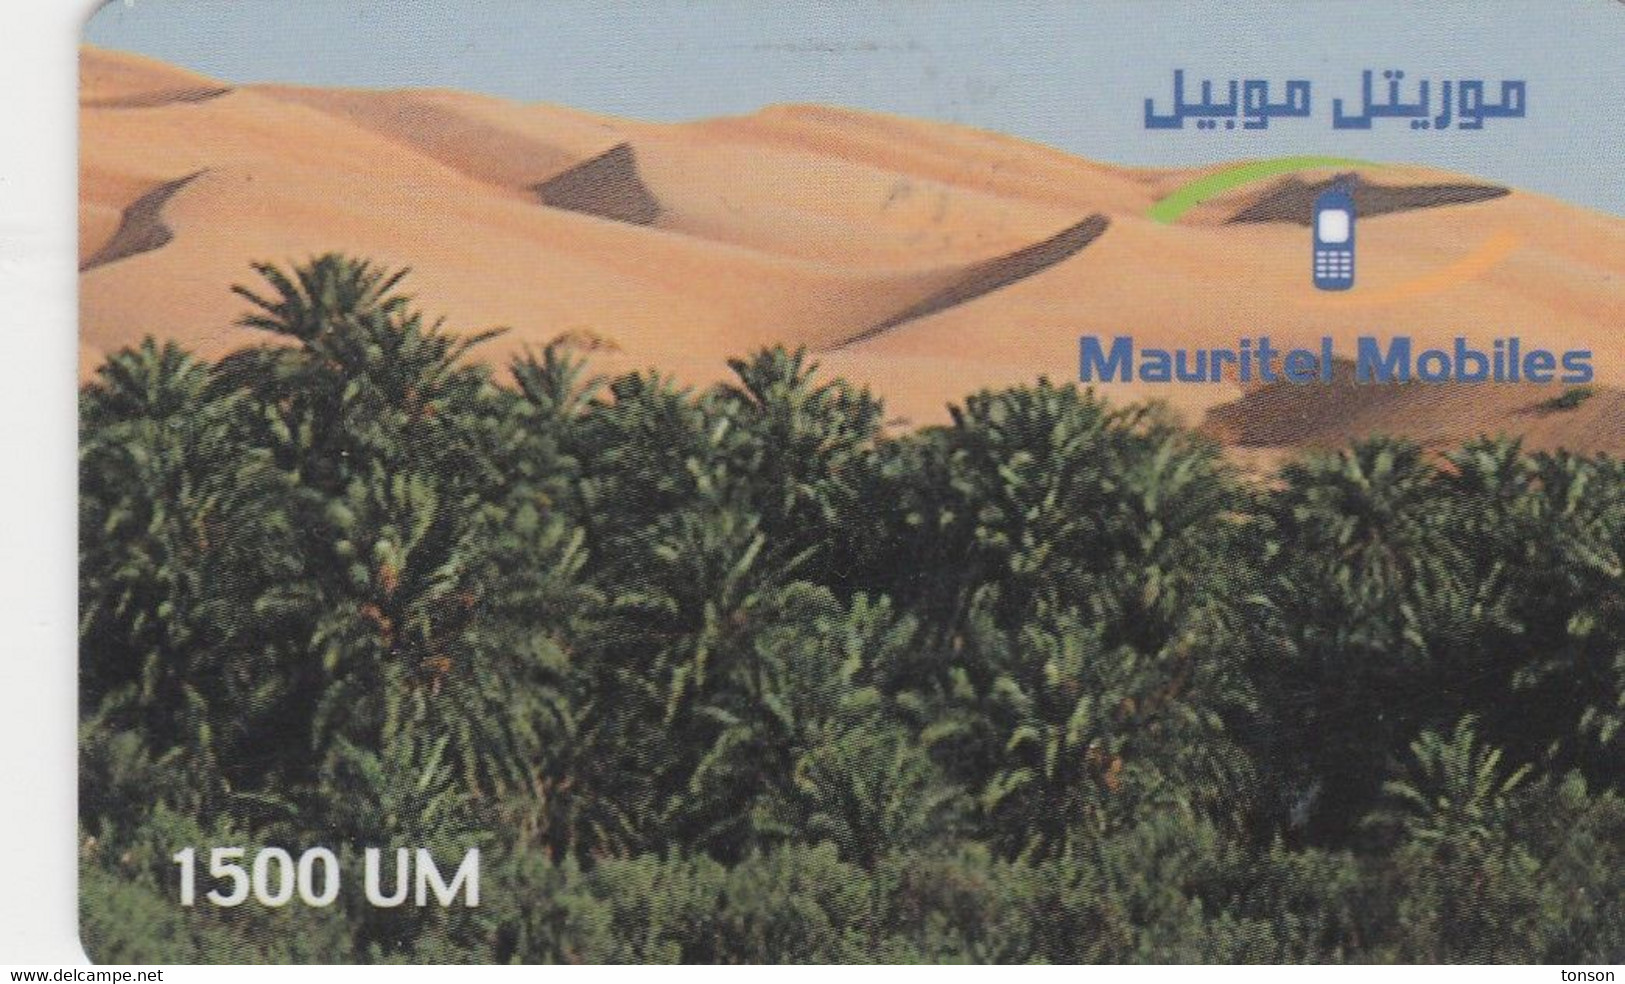 Mauritania, MR-MAU-NAT-0016, 1500 UM,  Désert - 2 (01-12-2001), 2 Scans. - Mauritanië